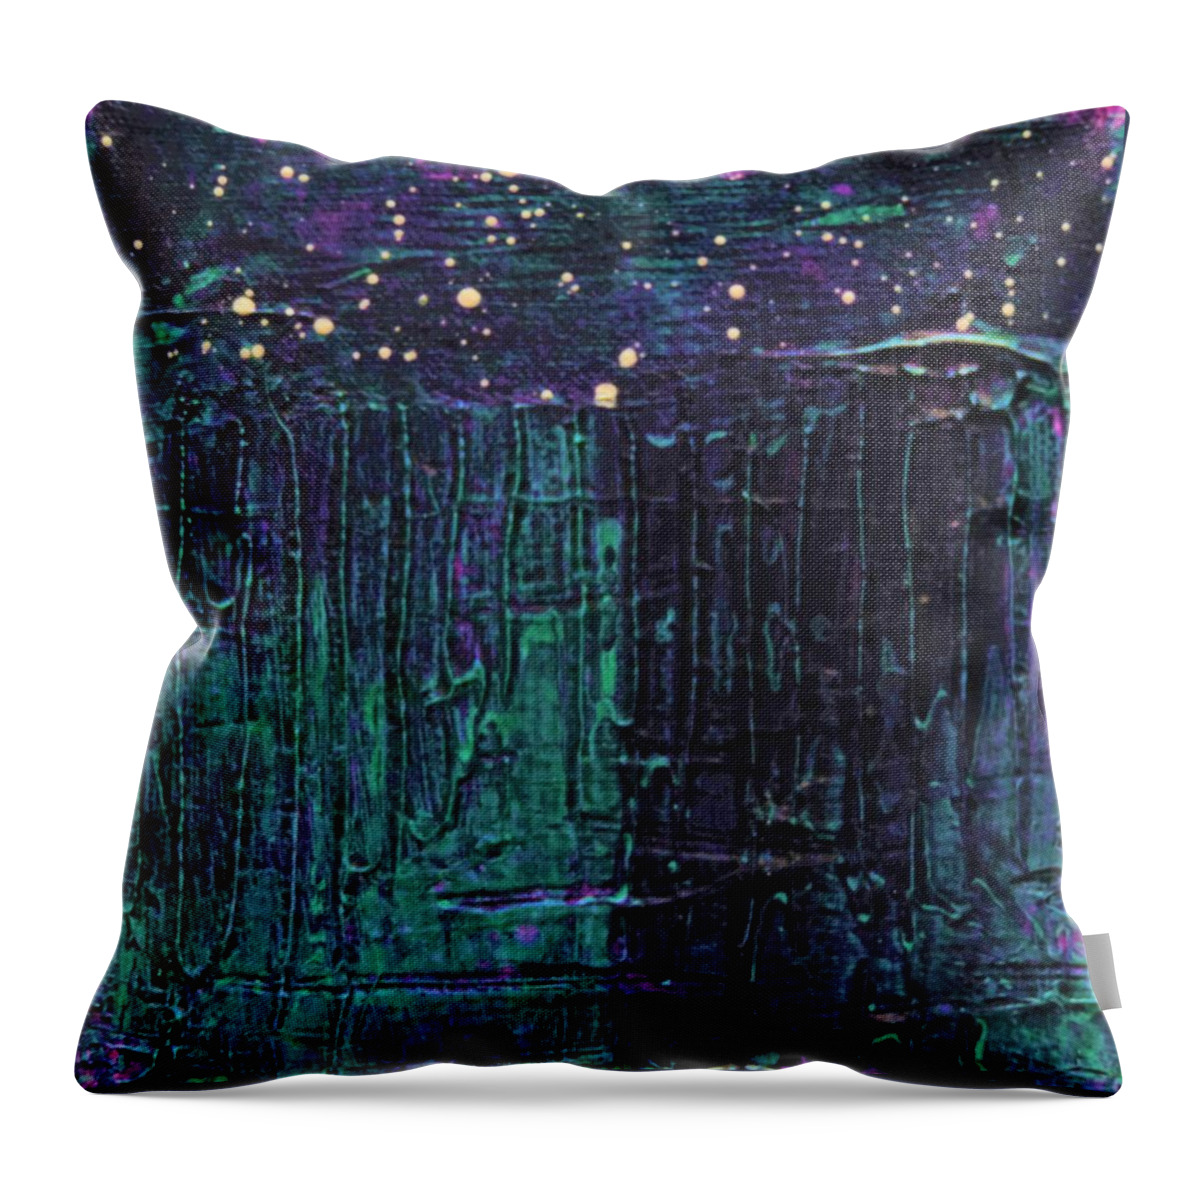 Desert Starlight 6x6 Throw Pillow featuring the painting Desert Starlight by Bill Tomsa